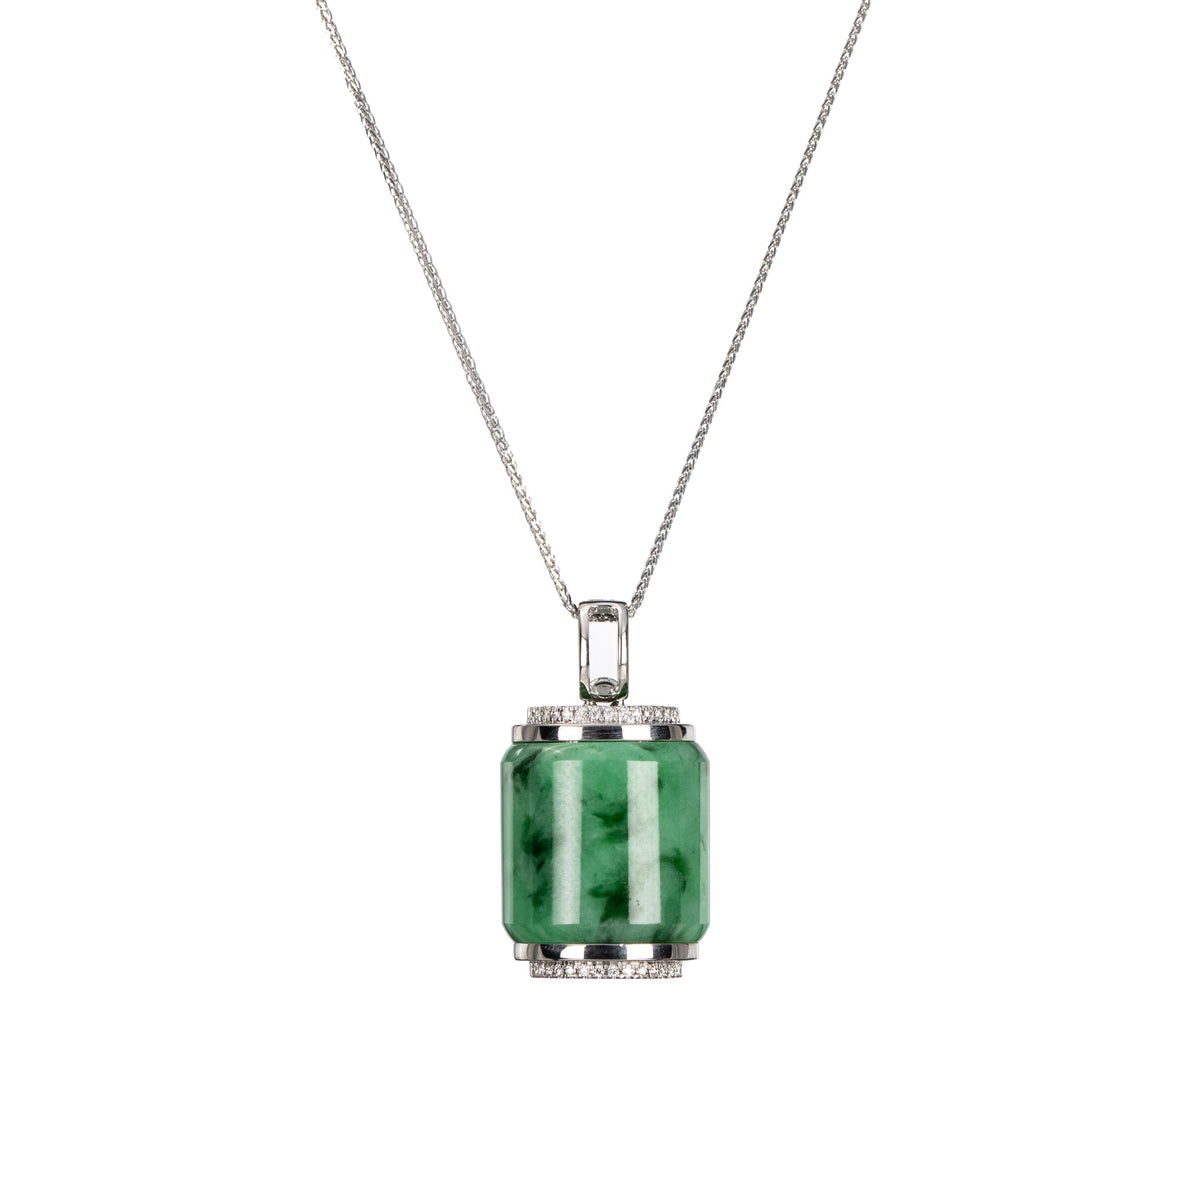 Celestial Cylindrical Jadeite Jade Pendant in 18K White Gold & Diamonds